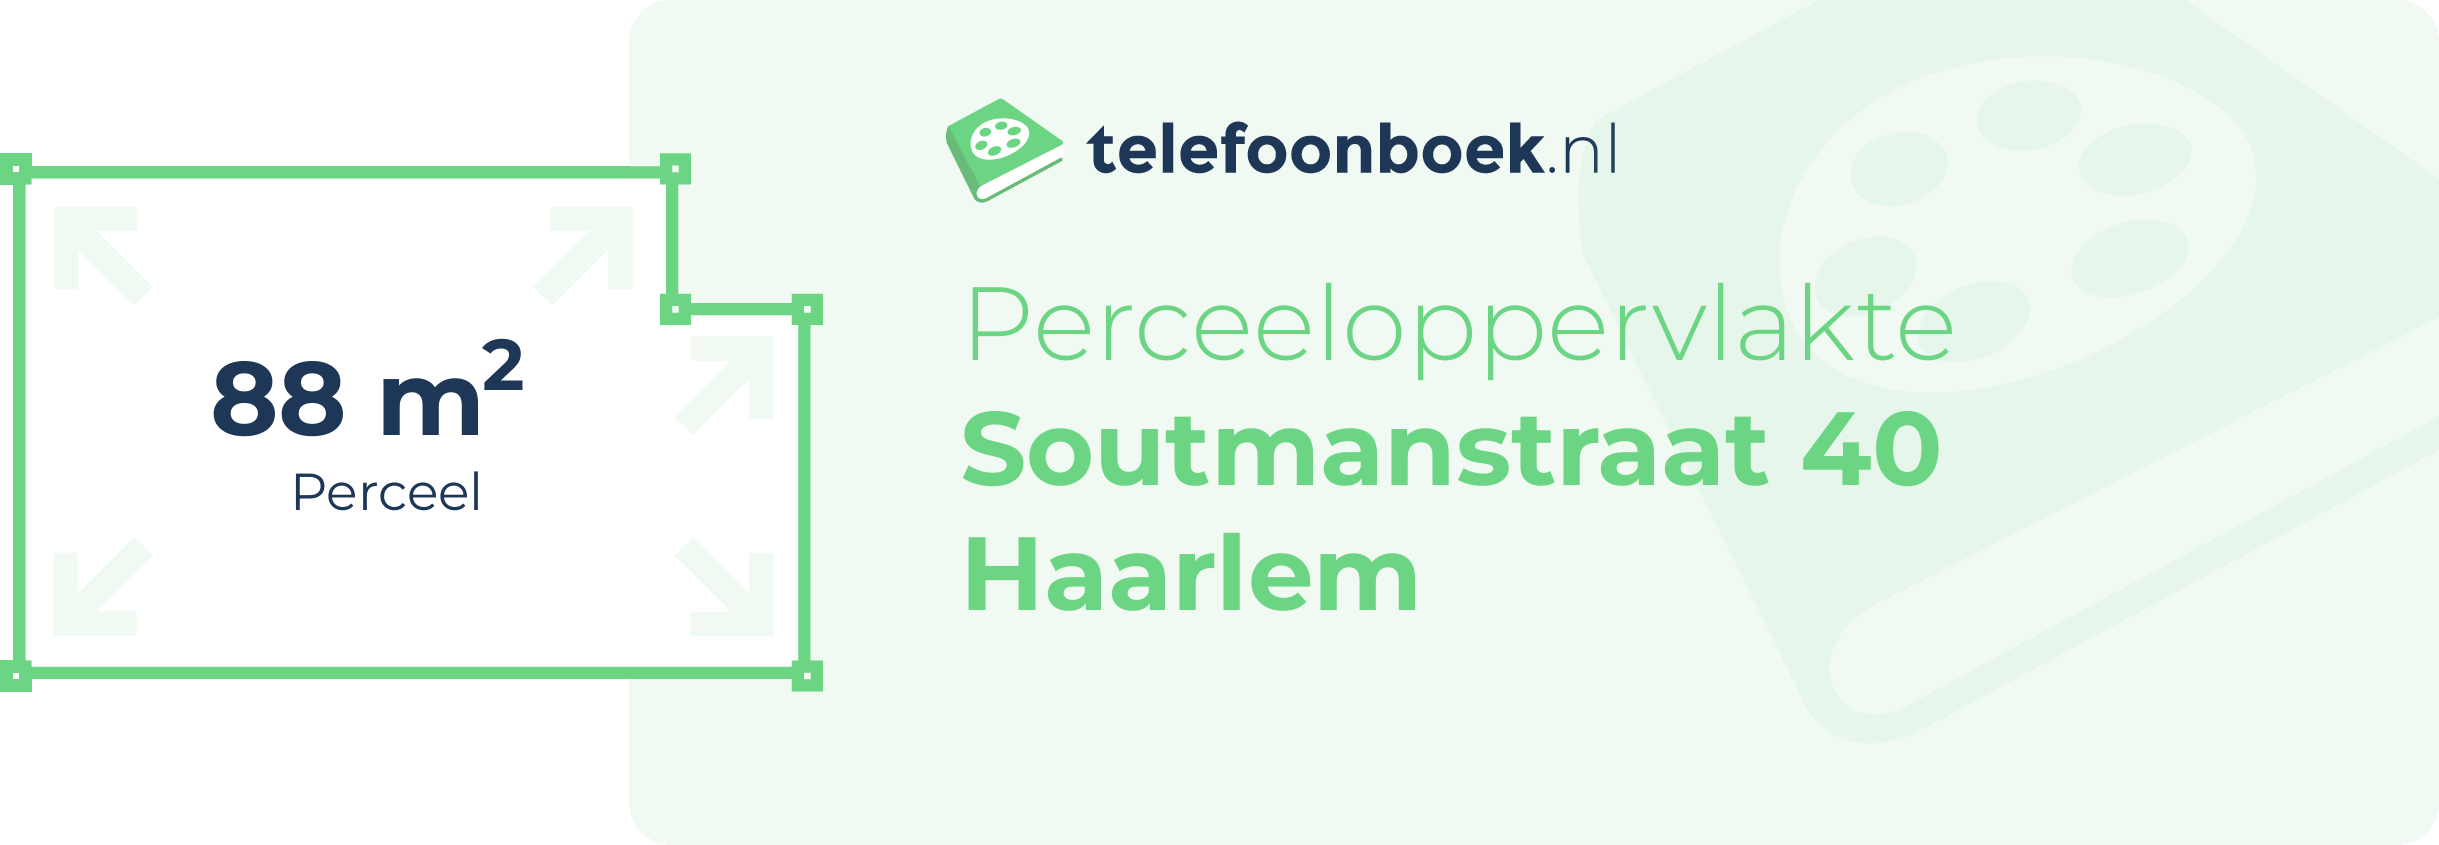 Perceeloppervlakte Soutmanstraat 40 Haarlem